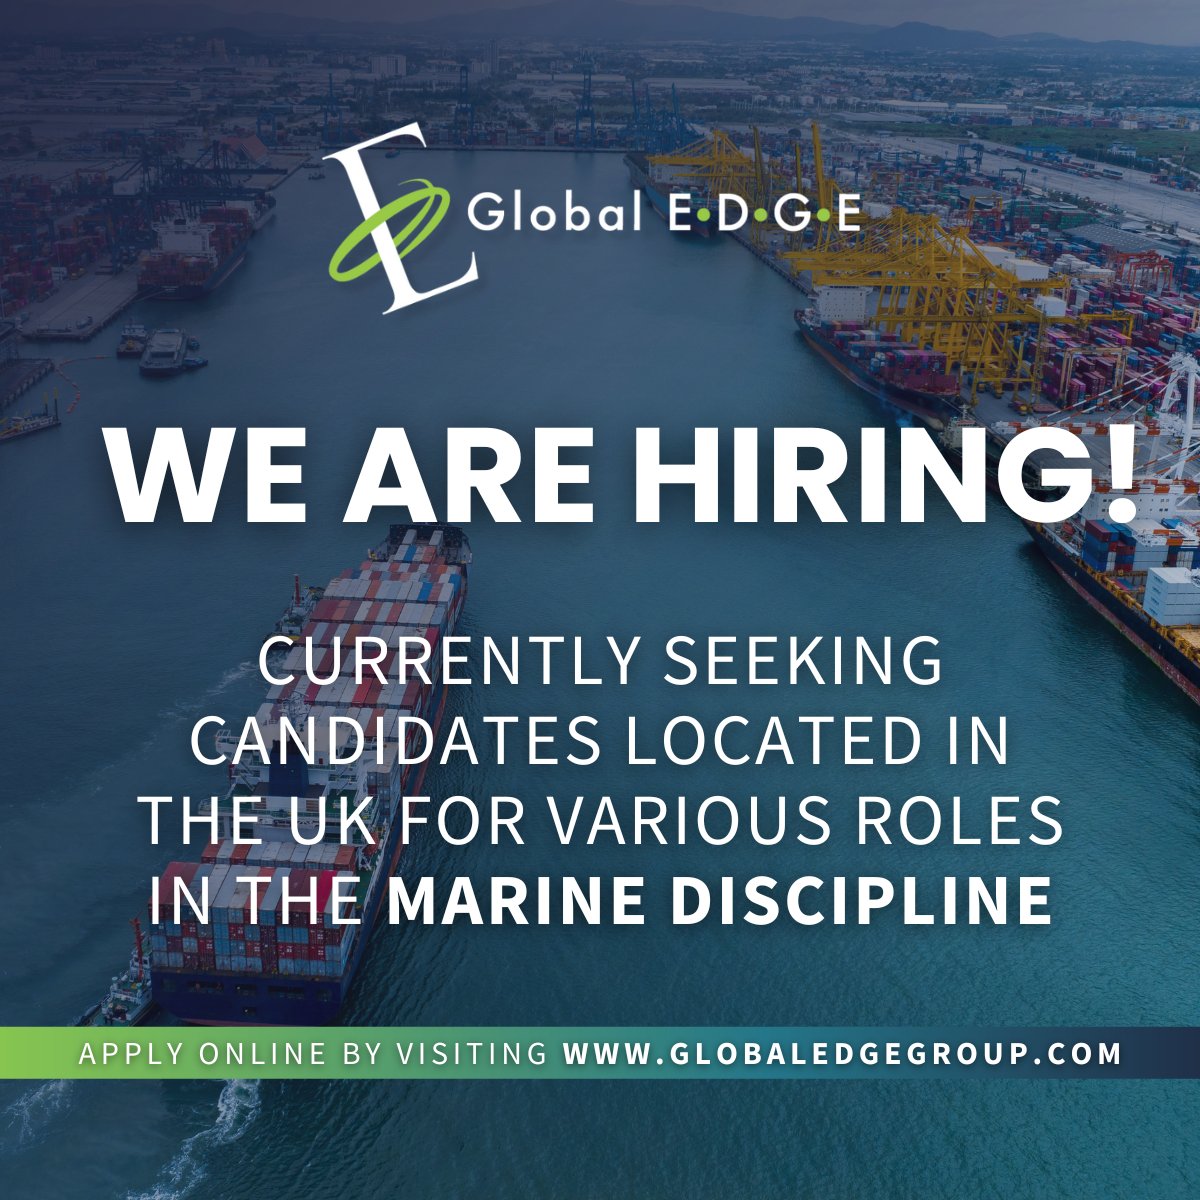 Candidates may apply by visiting globaledge.info/4a0JTtA

#TheGlobalEdge #UK #Marine #MarineJobs #Logistics #MarineShipping